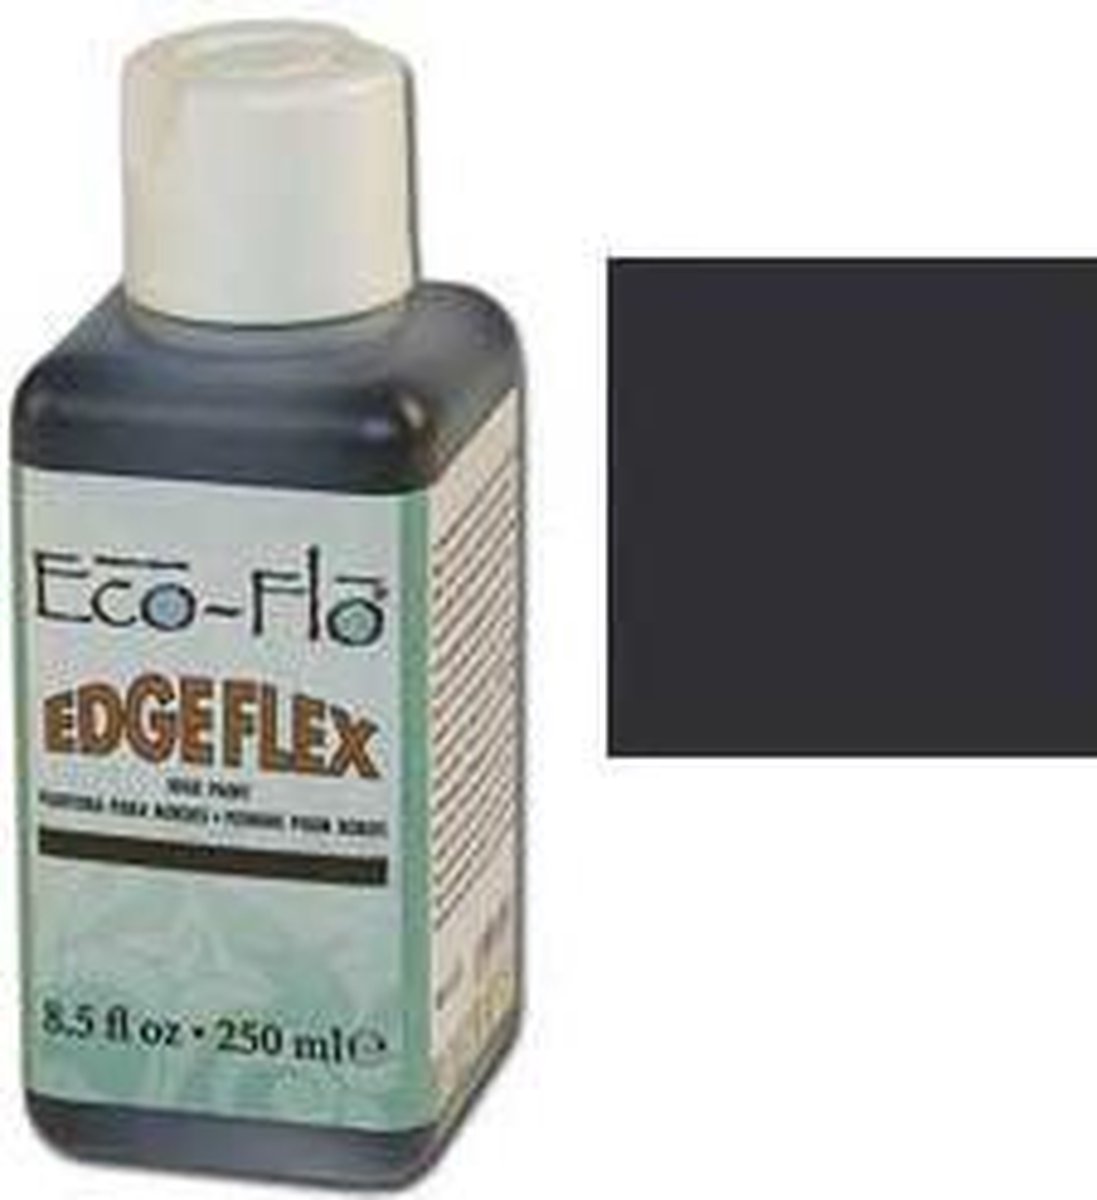 Leerverf Eco-Flo Edgeflex Donkerbruin, 250 ml